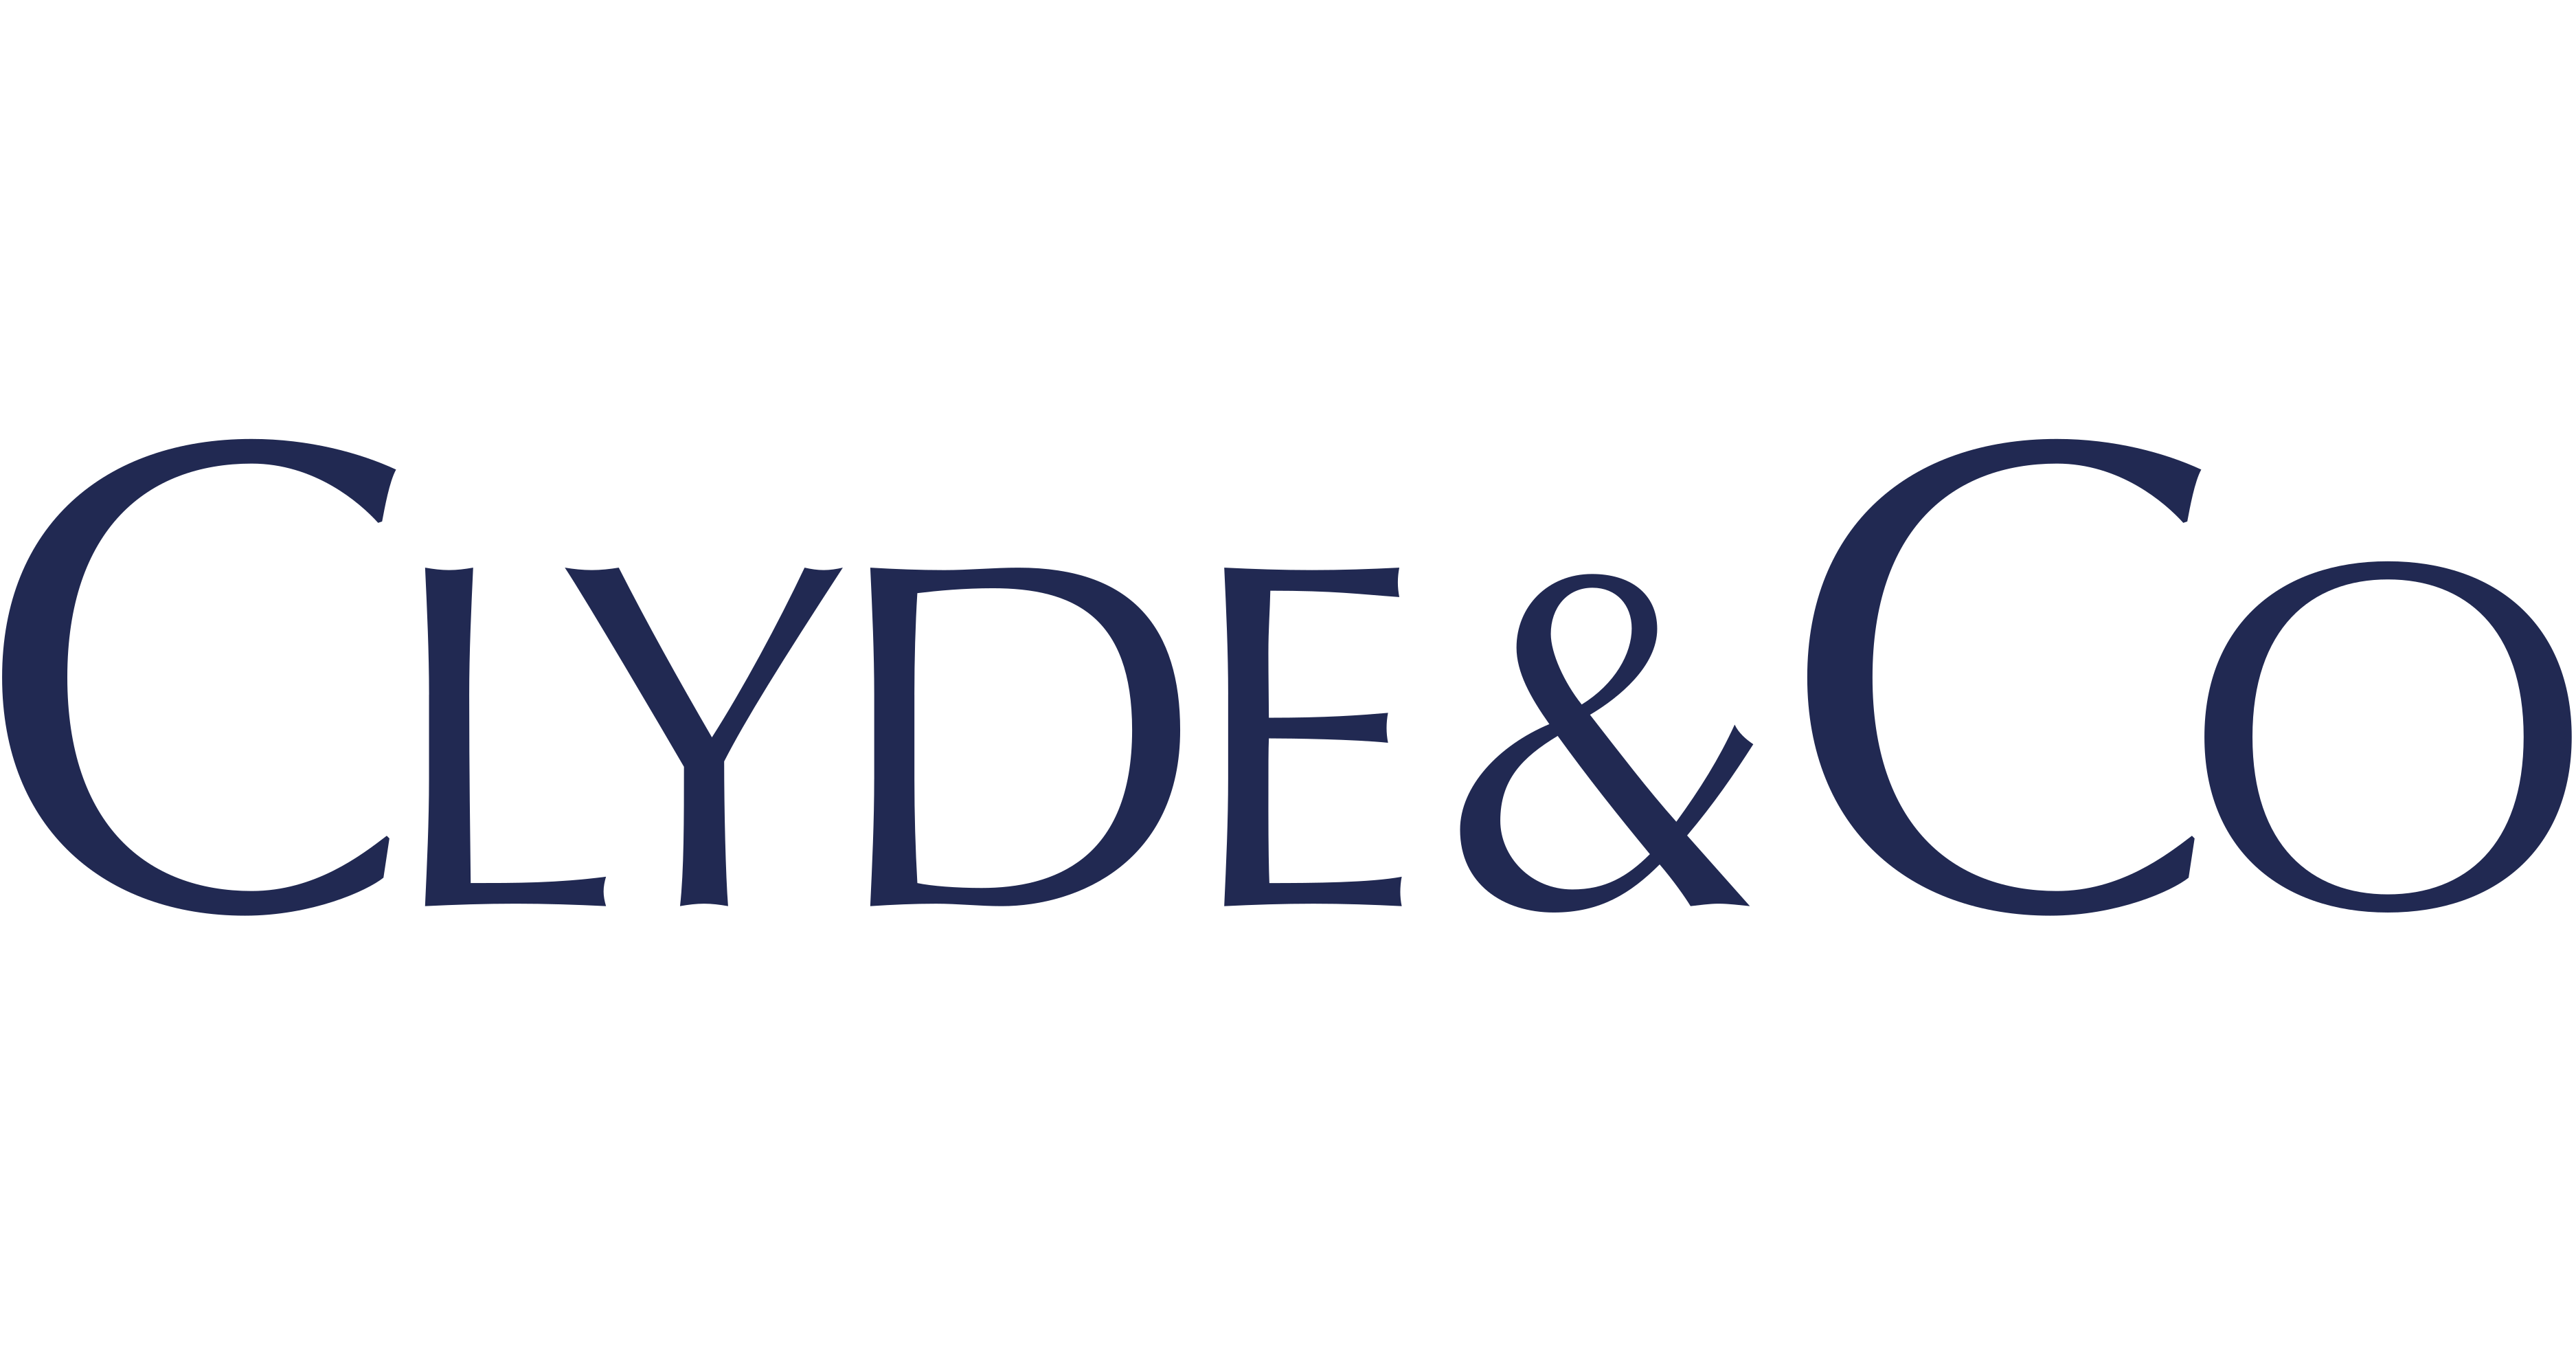 Clydo & Co using 6clicks for legal services